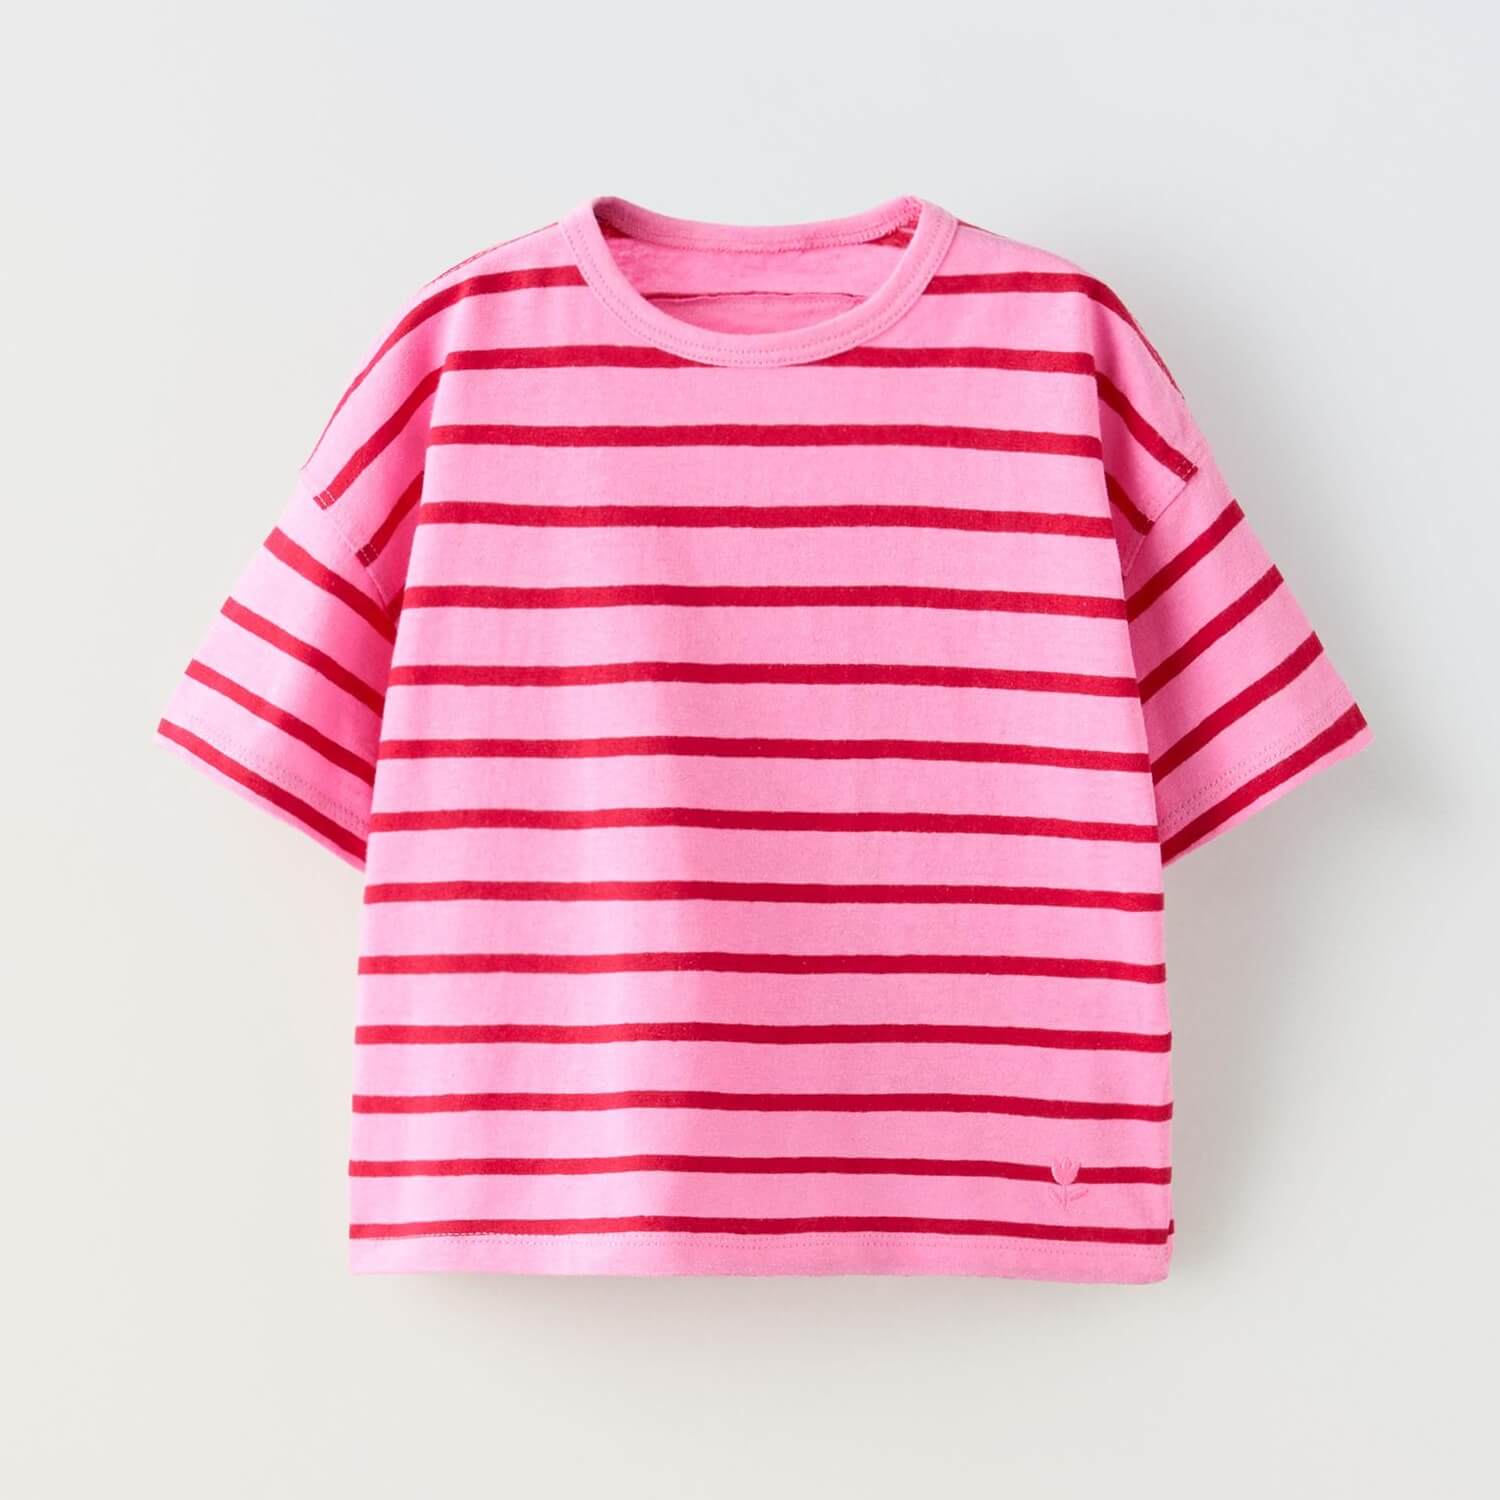 Футболка Zara Woven Striped With Embroidery, темно-розовый футболка zara woven striped with embroidery голубой зеленый